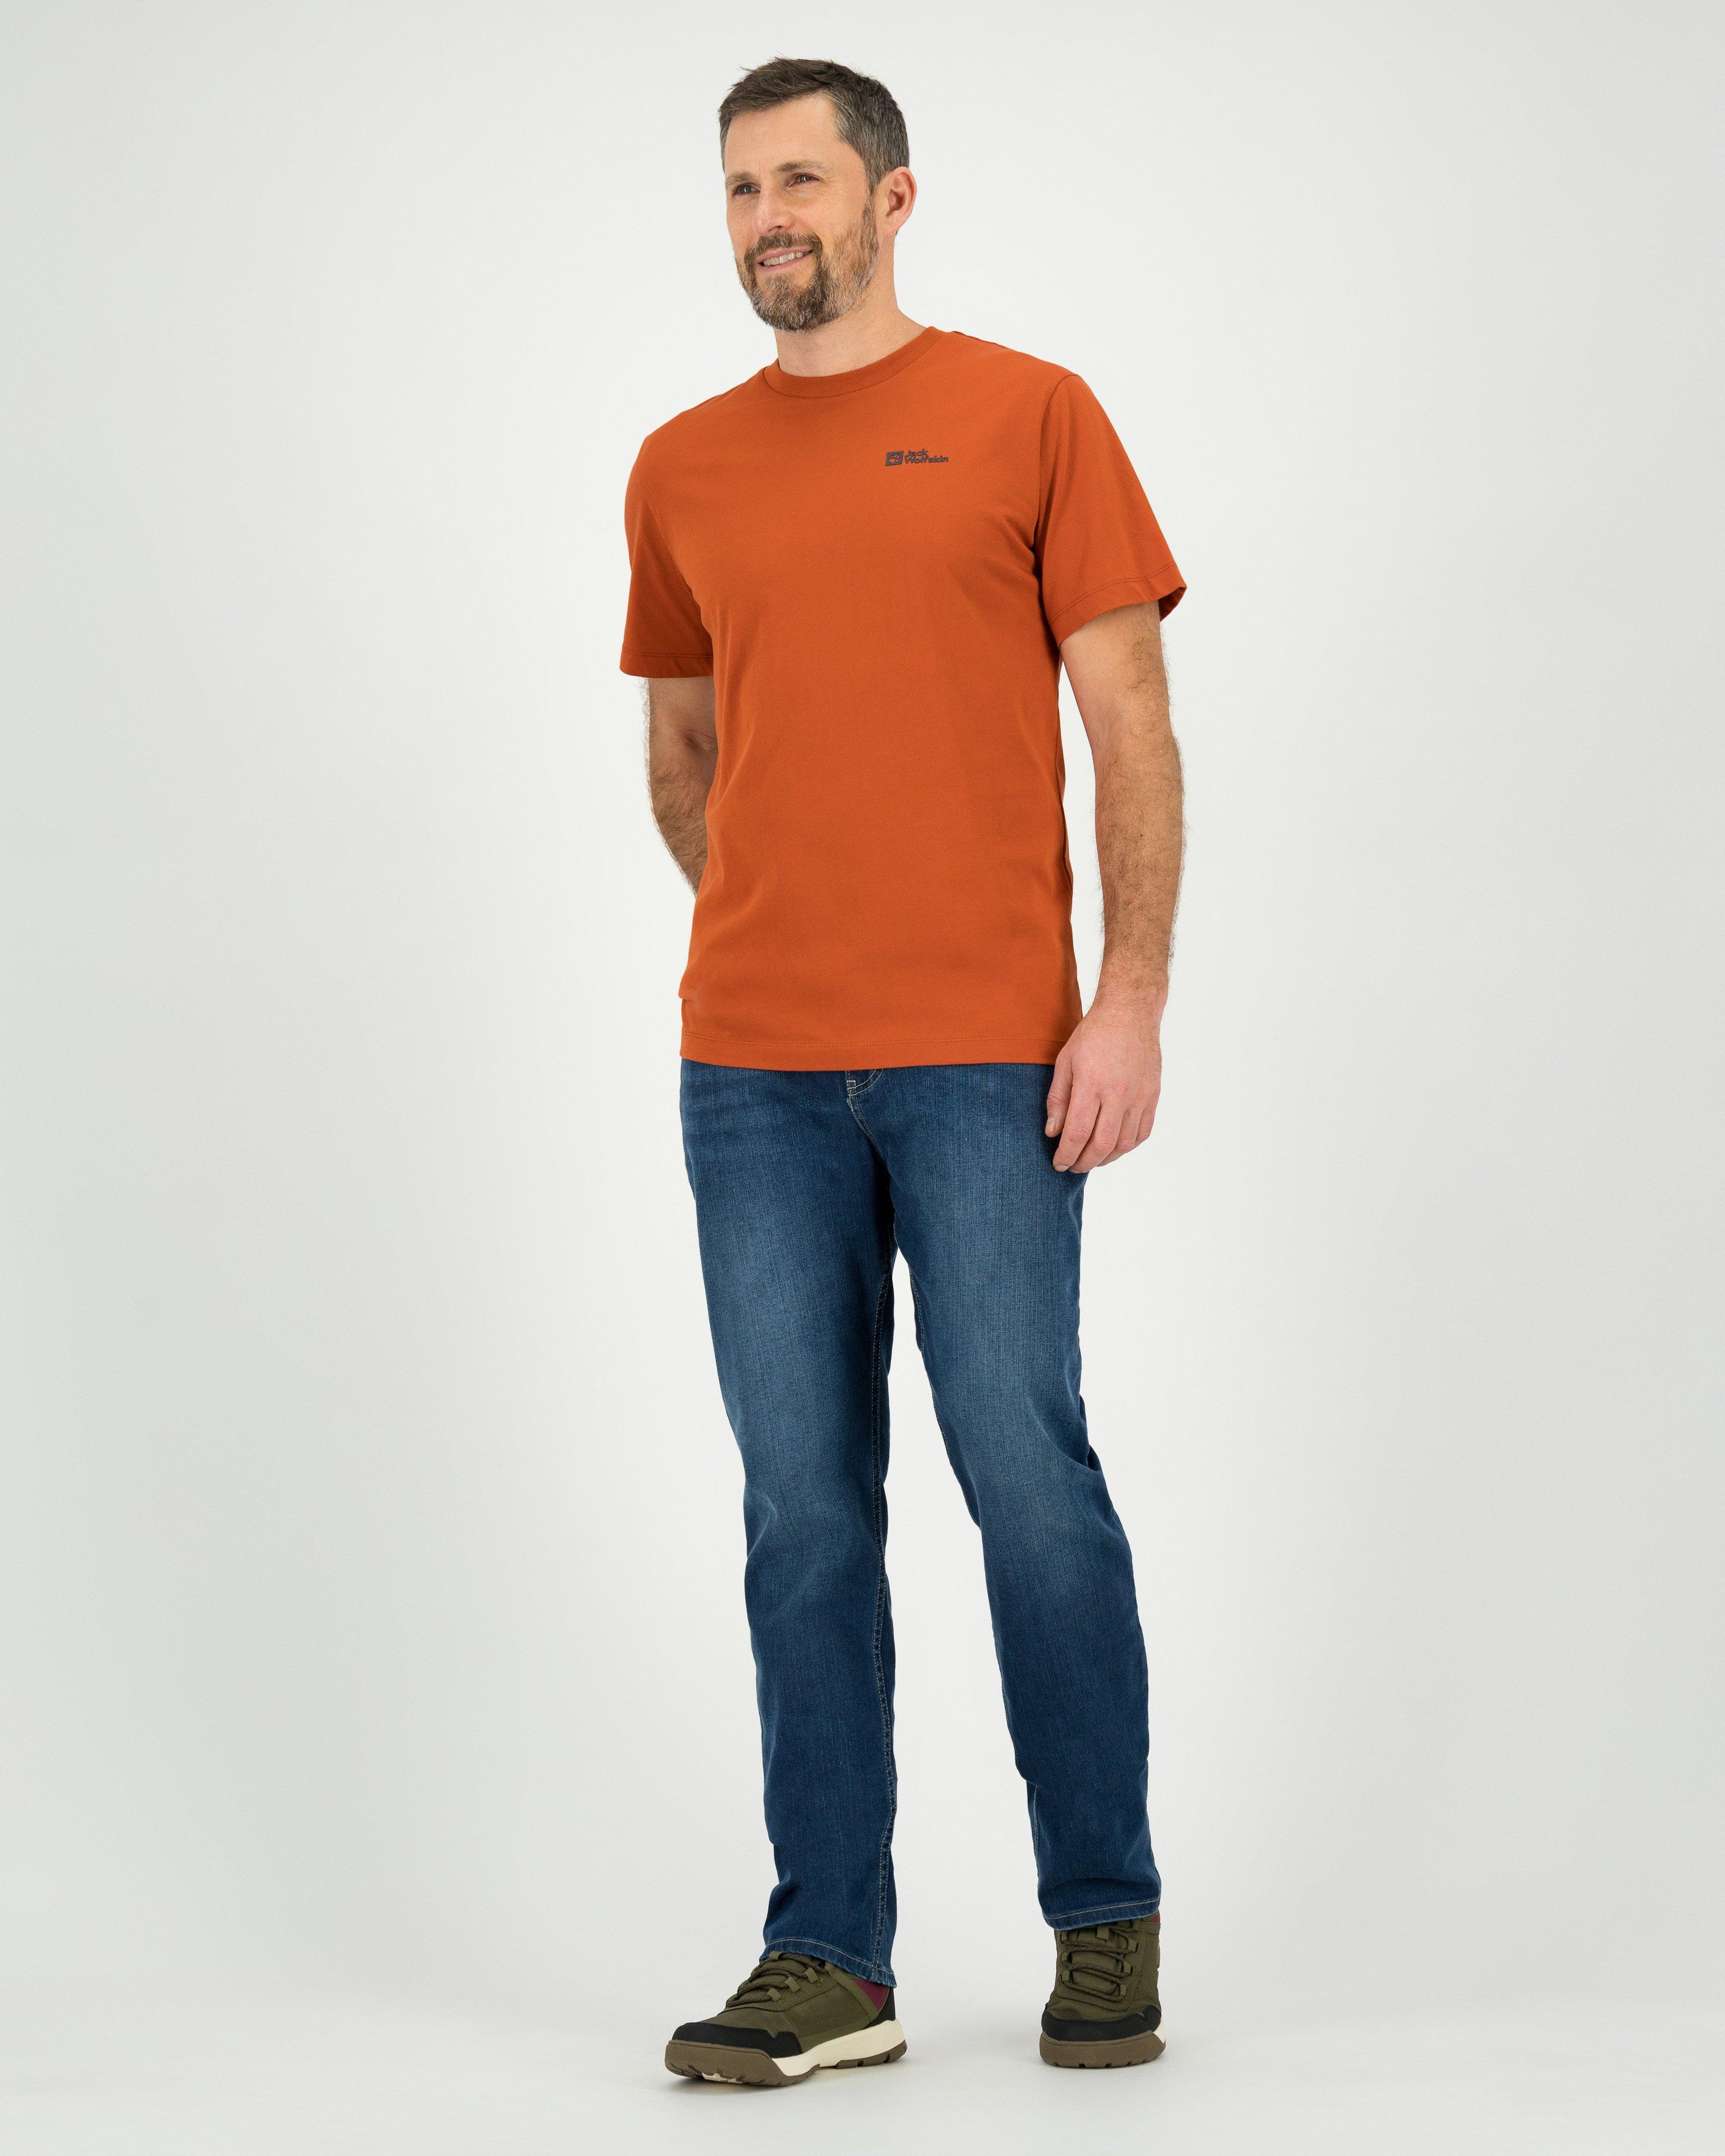 Jack Wolfskin Men’s Essential Cotton T-shirt  -  Berry